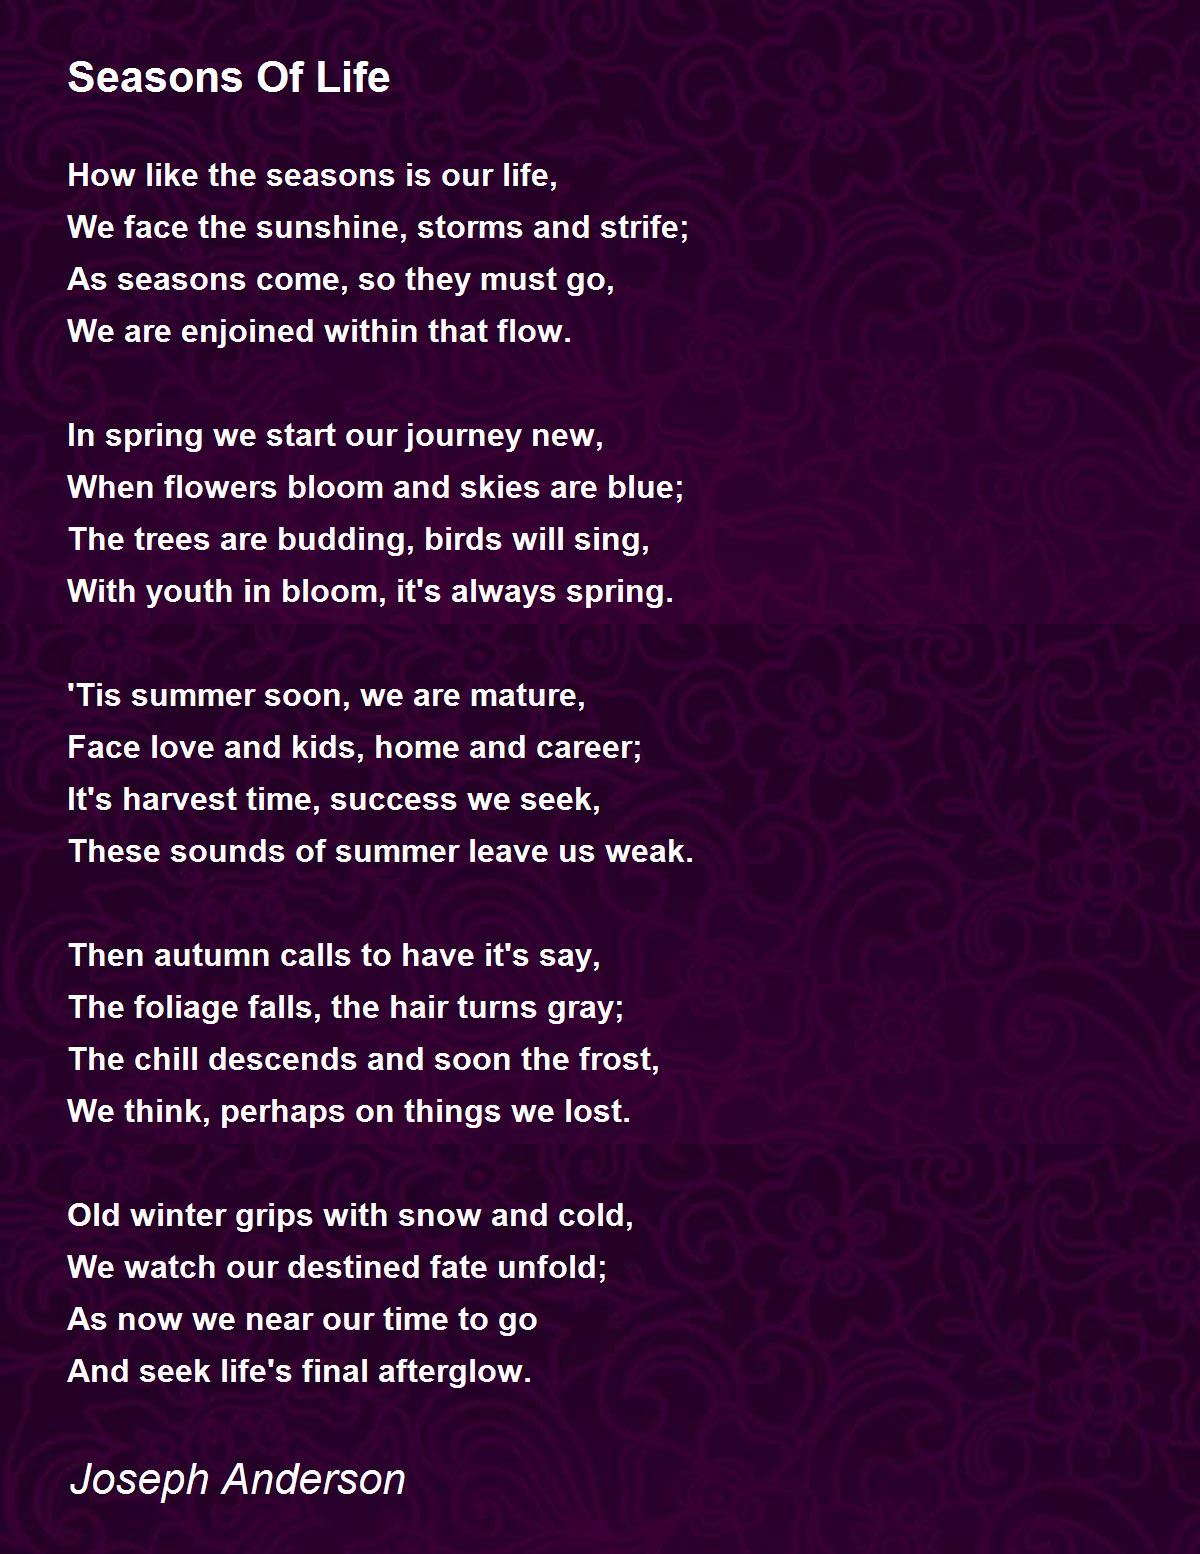 Seasons Of Life Poem by Joseph Anderson - Poem Hunter